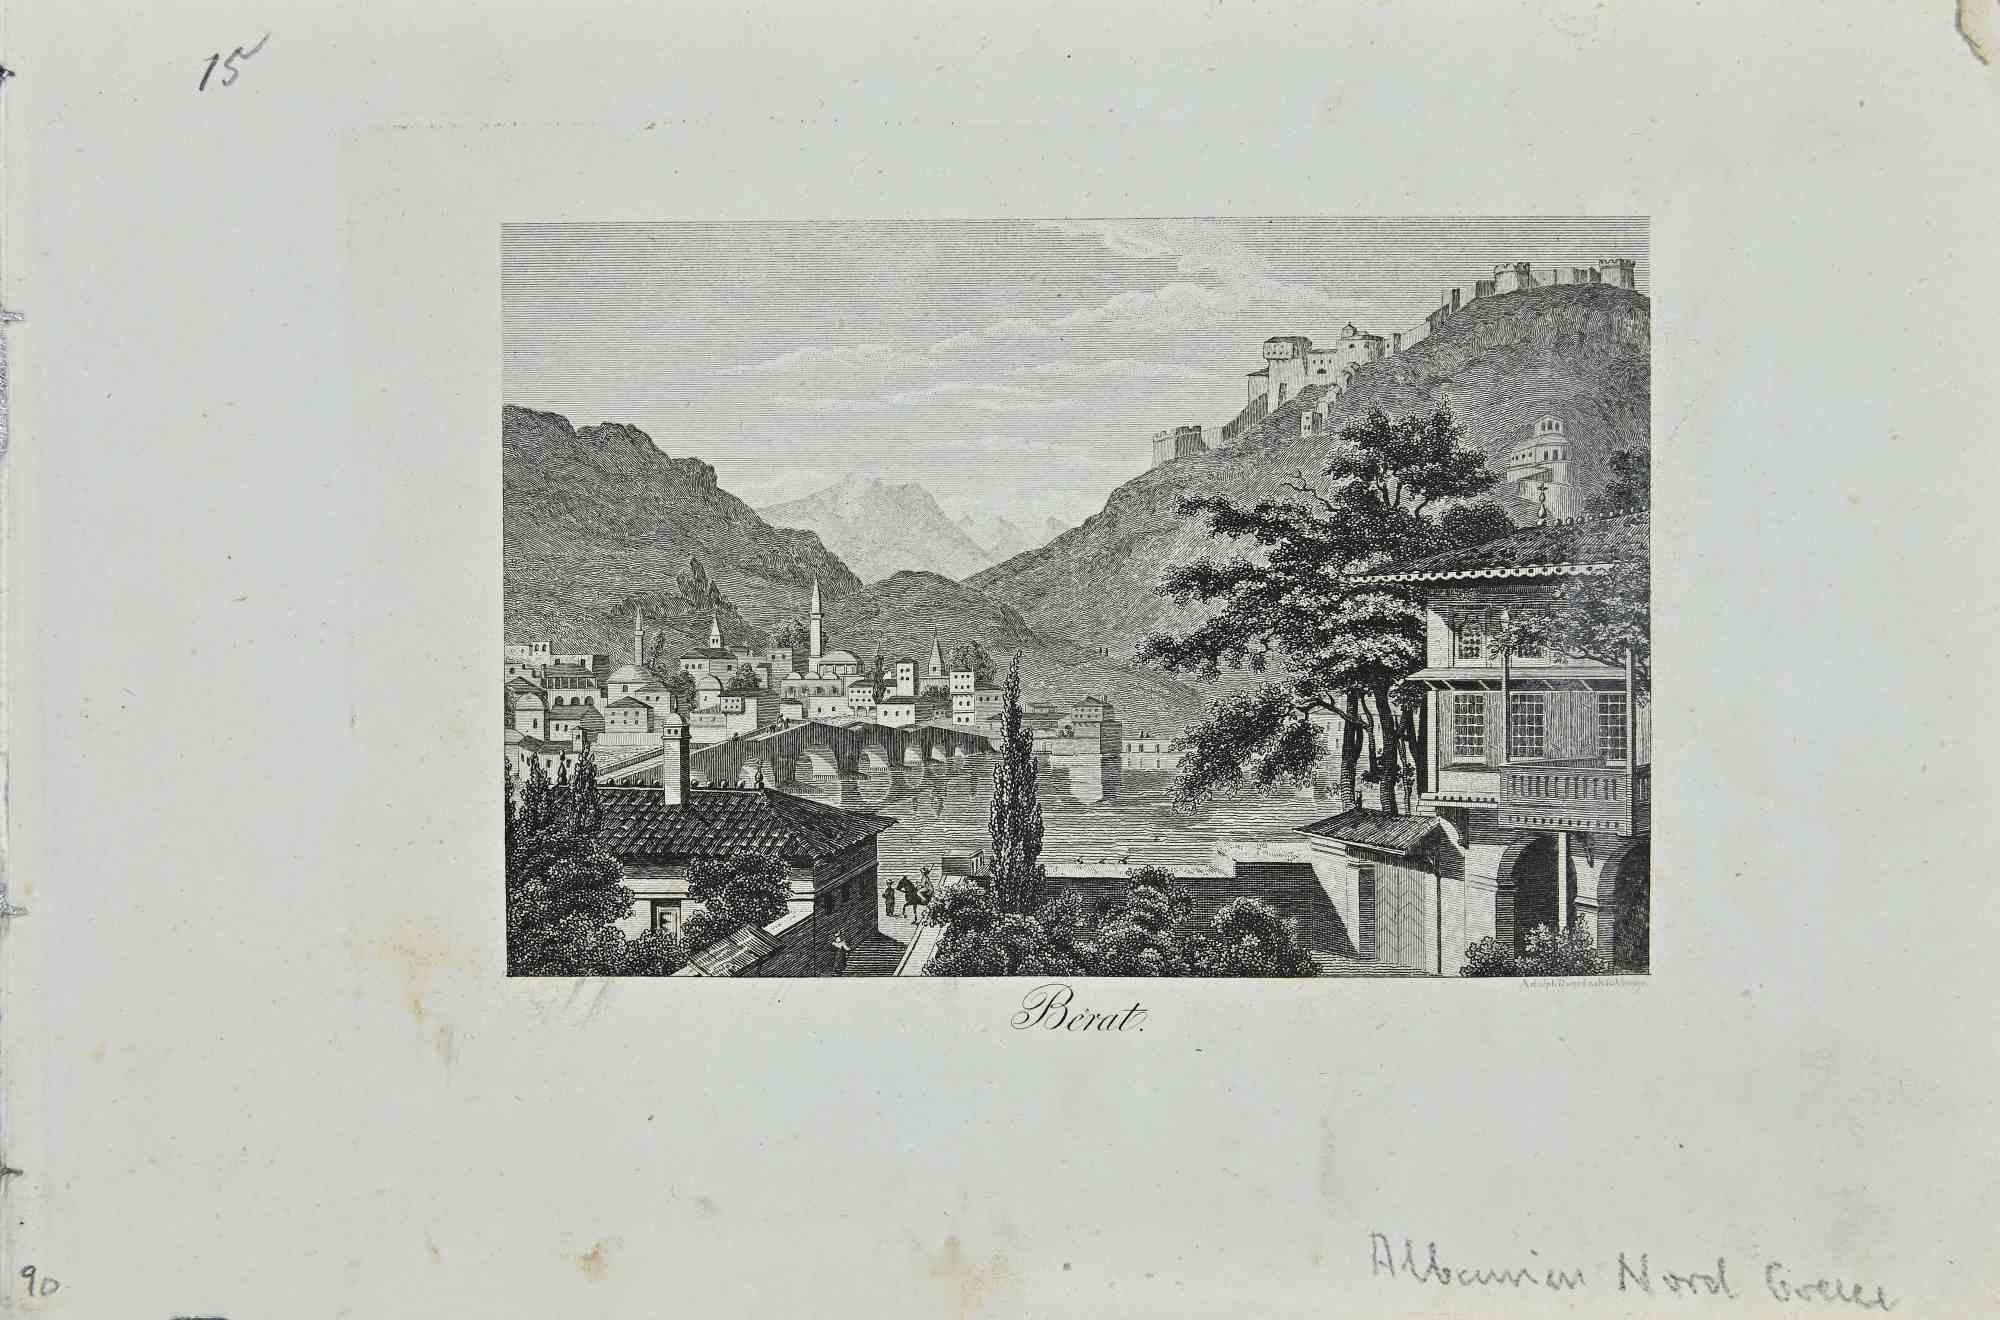 Unknown Figurative Print - View of Berat - Original Lithograph - 19th Century